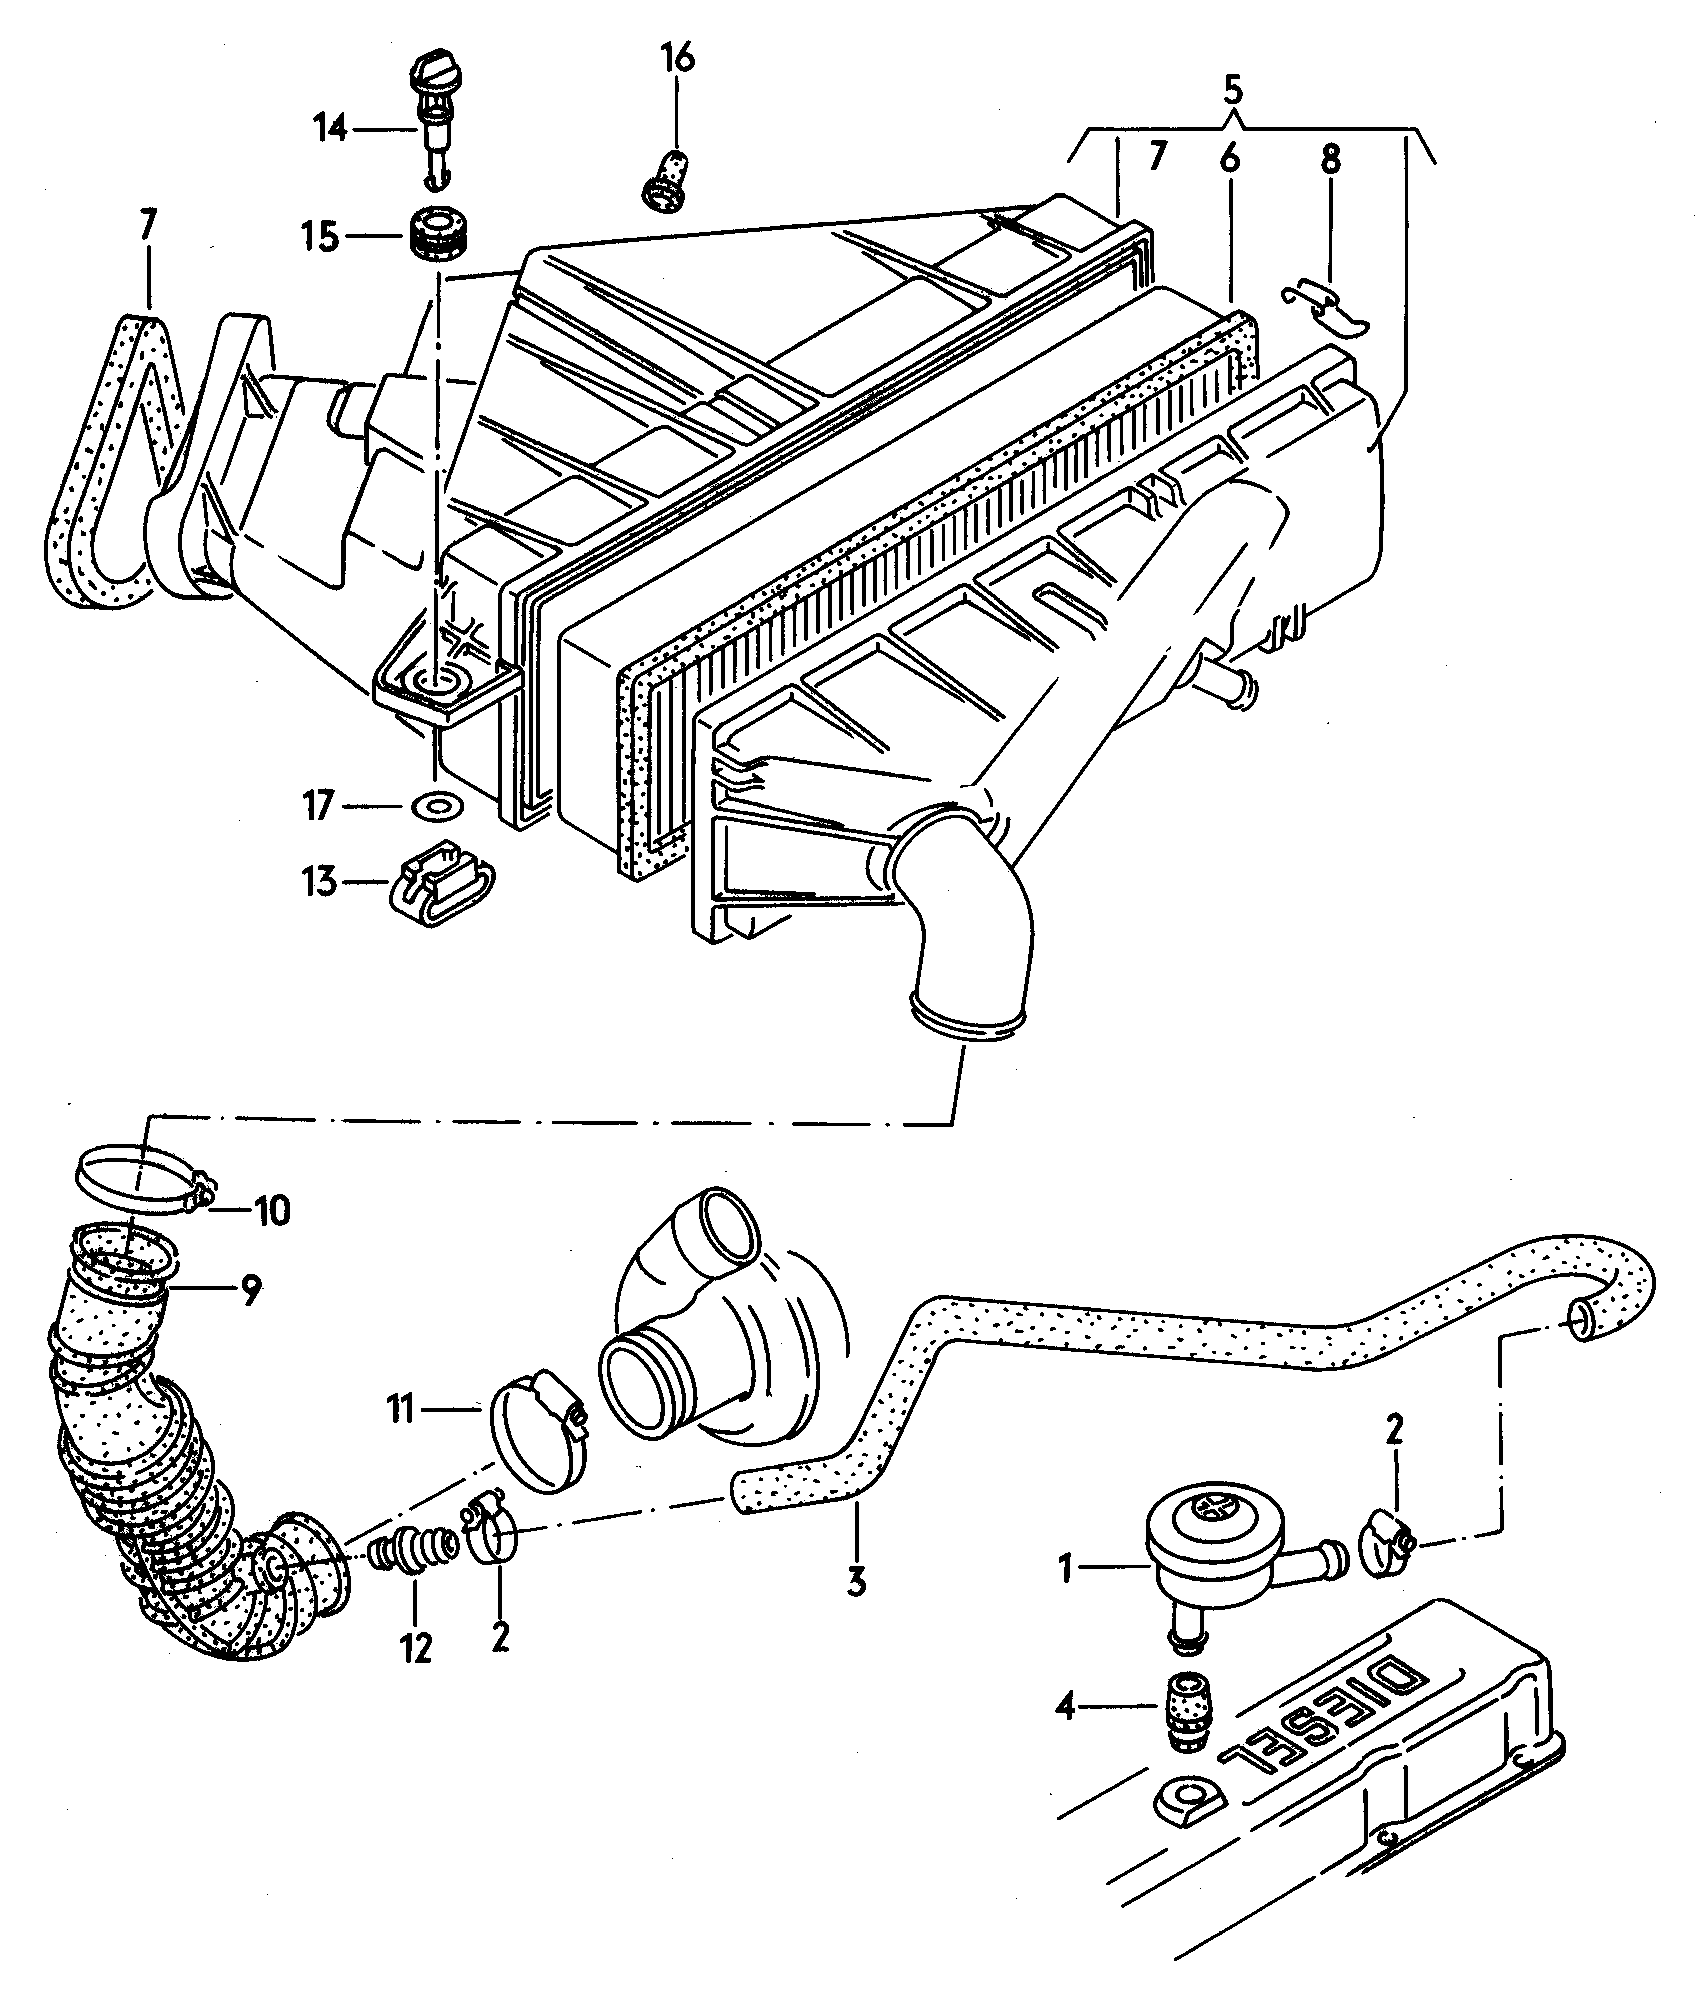 Air filterPressure regulating valve 2.0 Ltr. - Audi 100 - a10